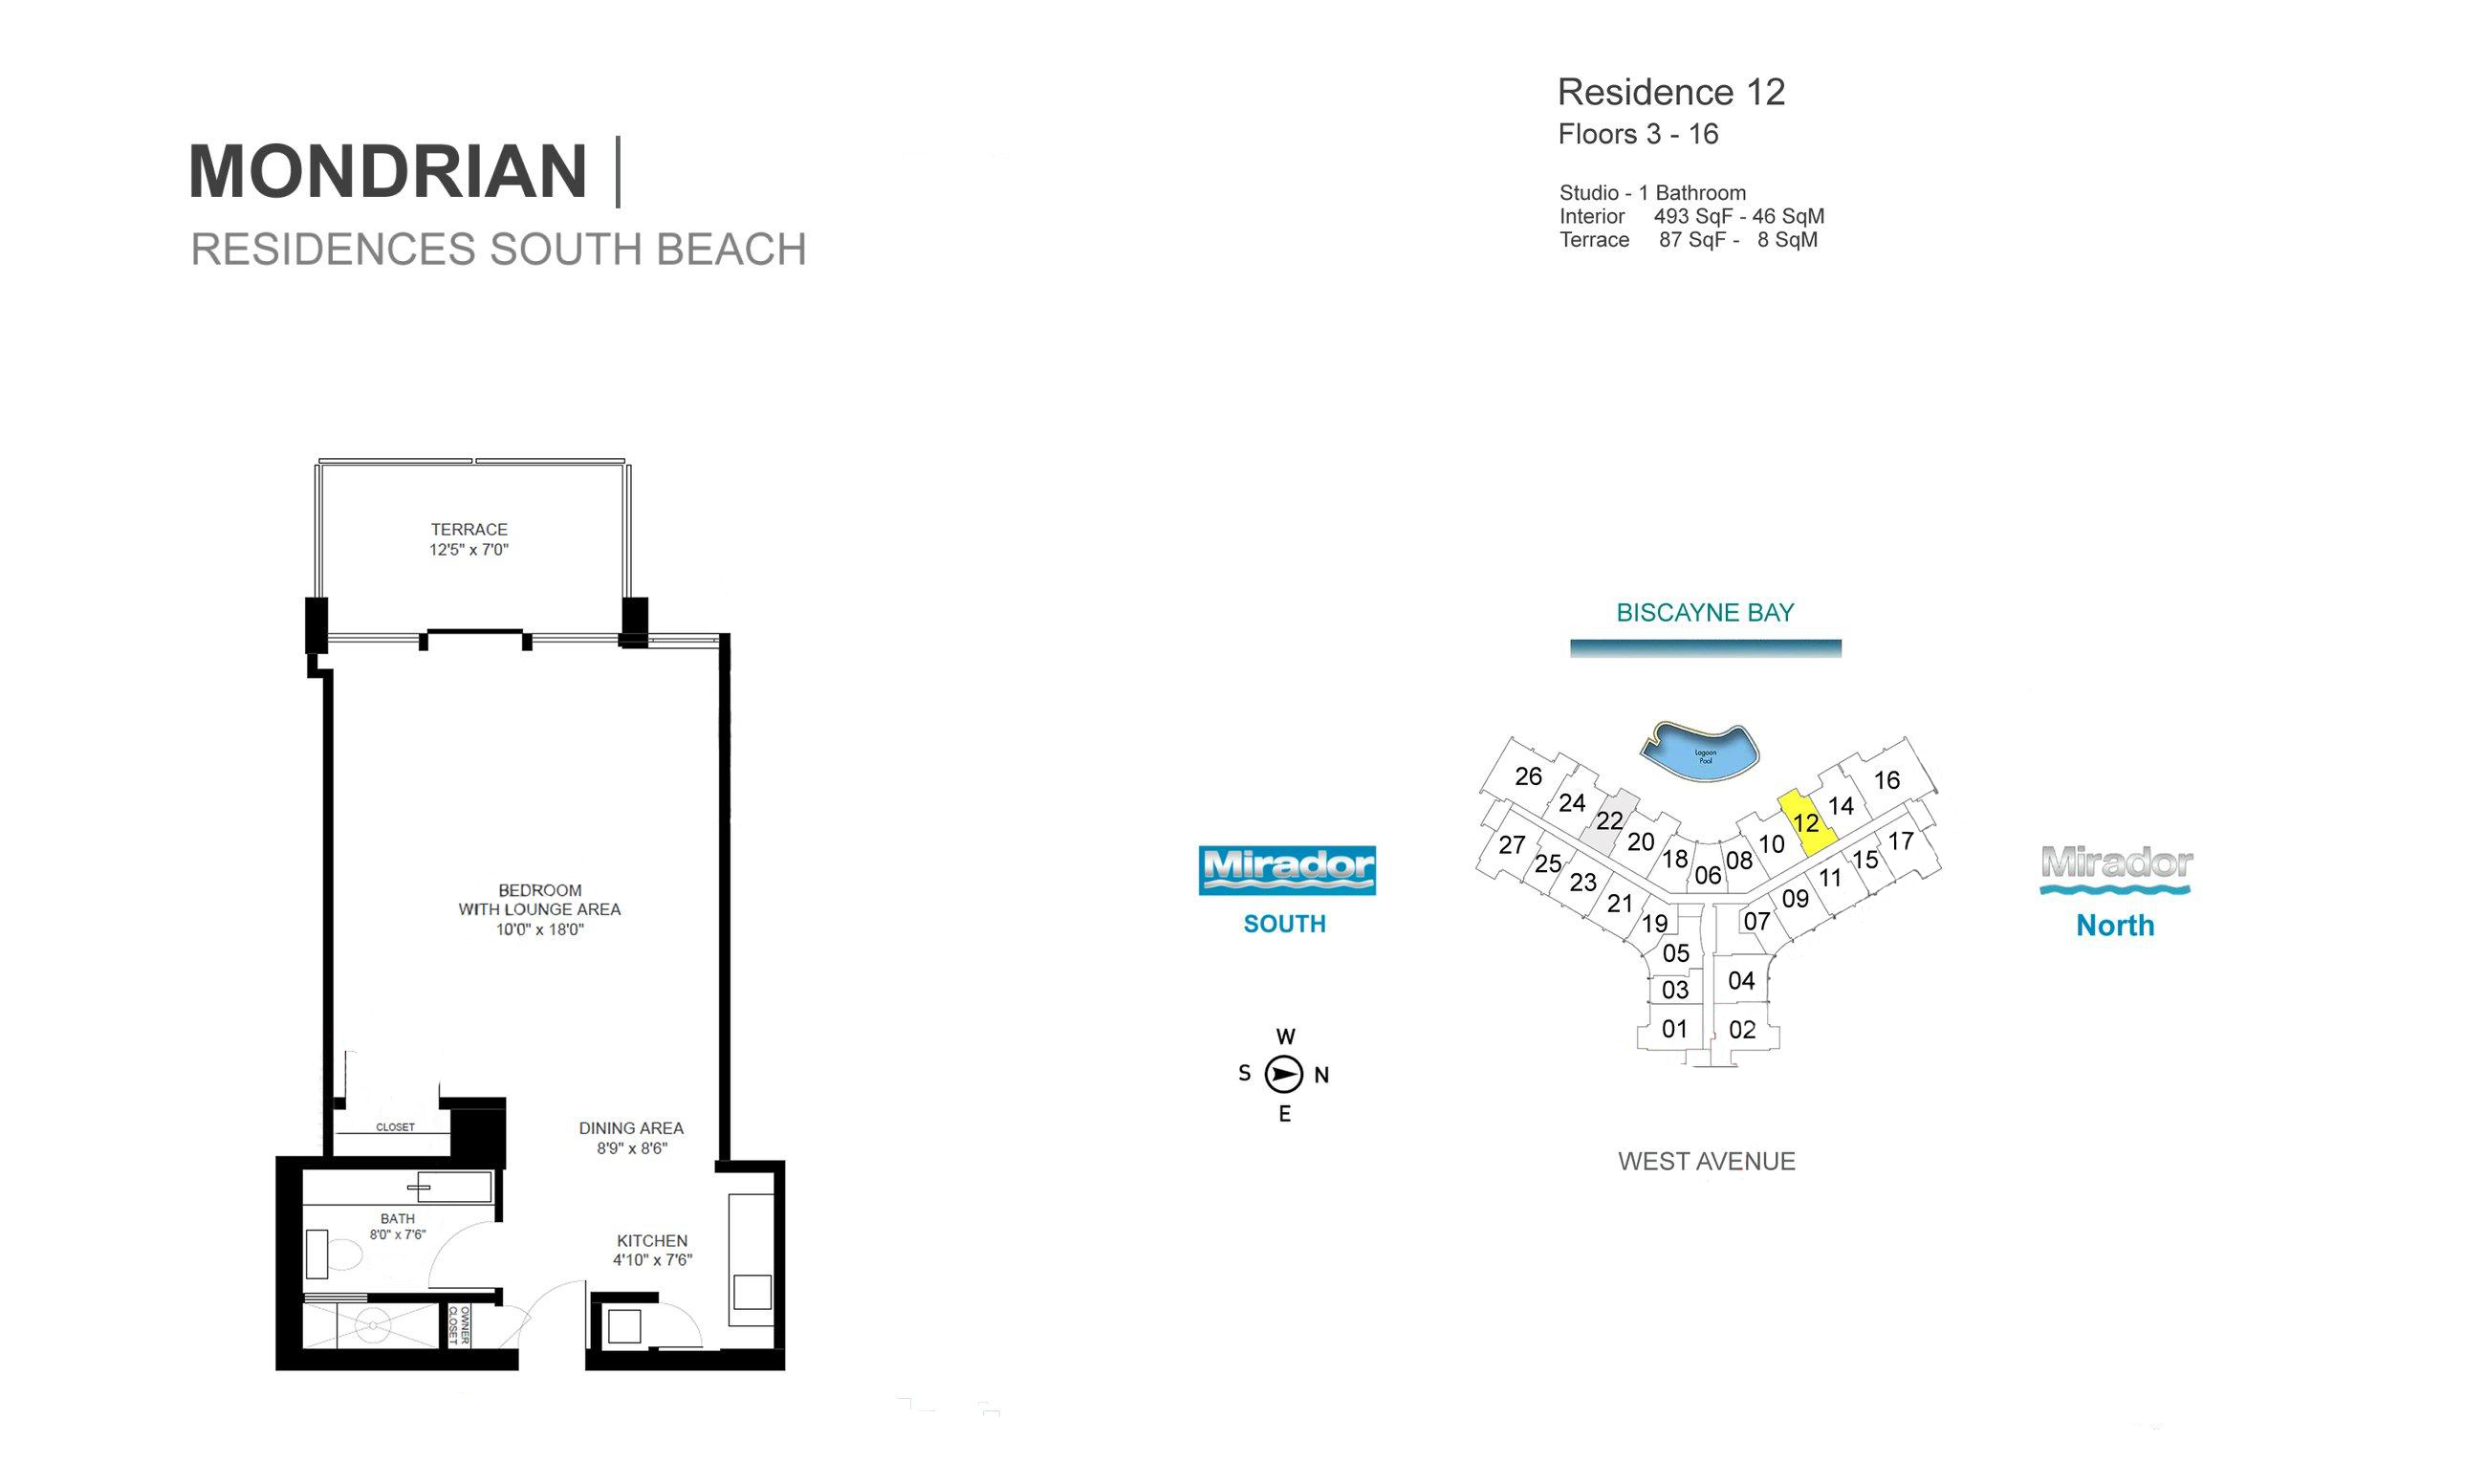 Mondrian South Beach Residence 12